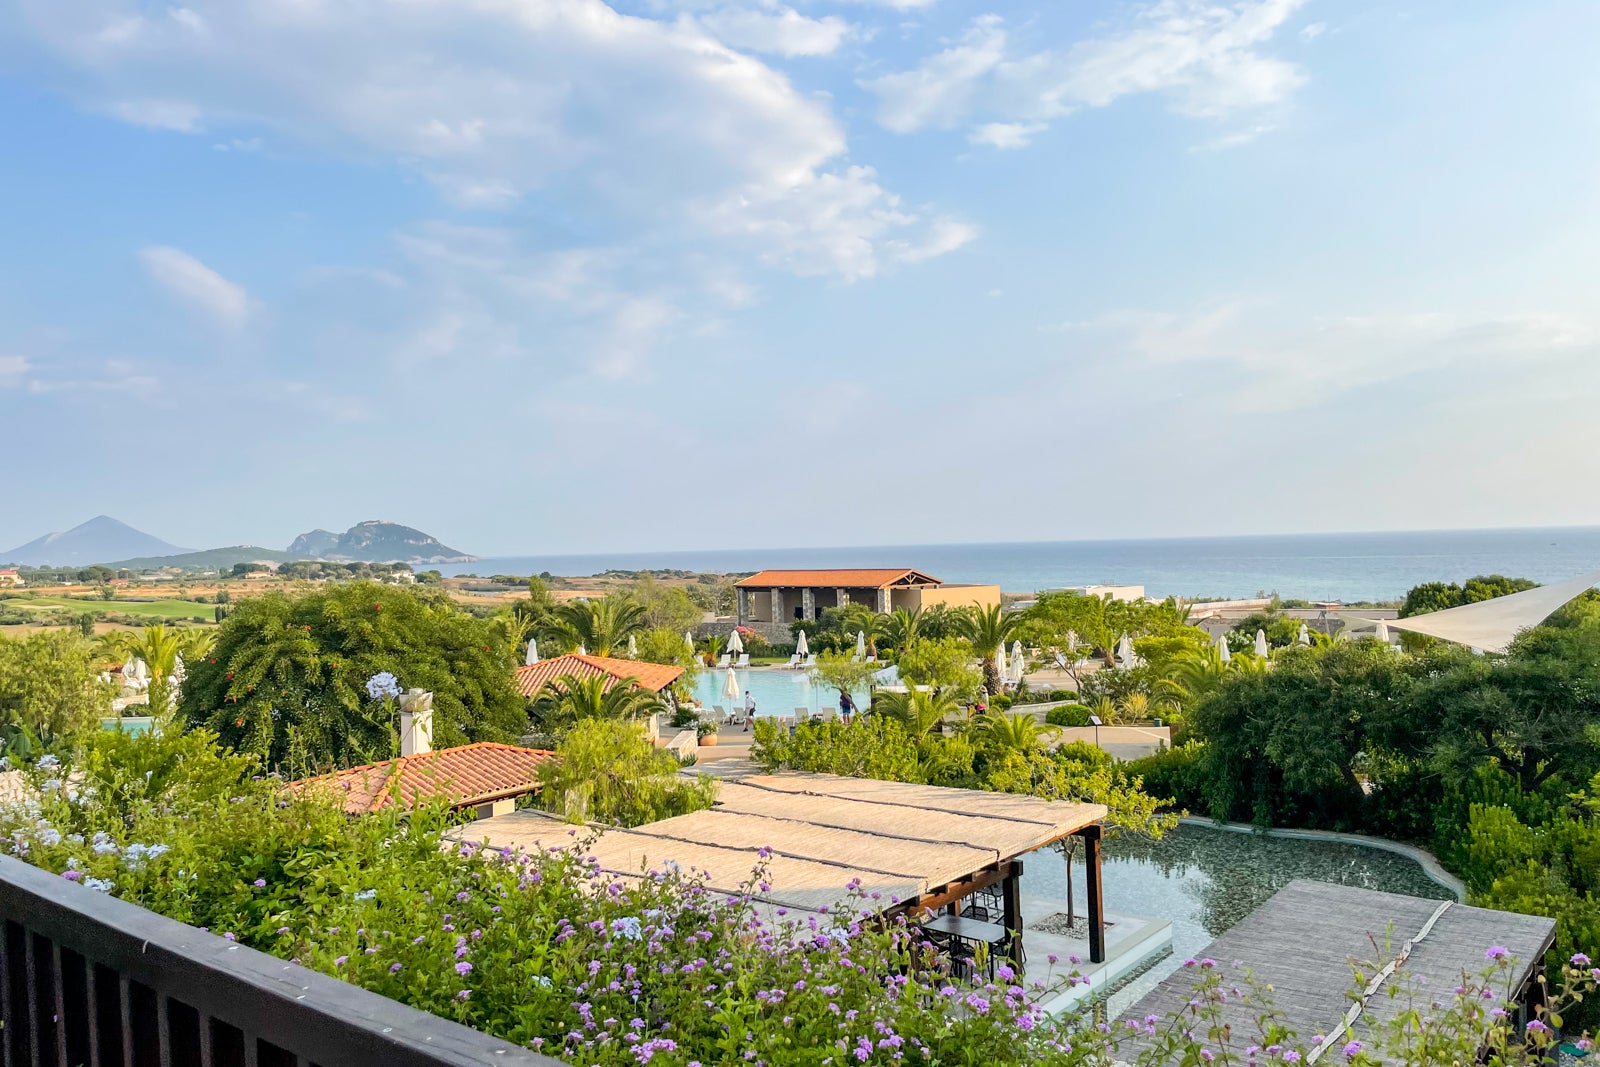 Review of The Westin Resort, Costa Navarino in Greece